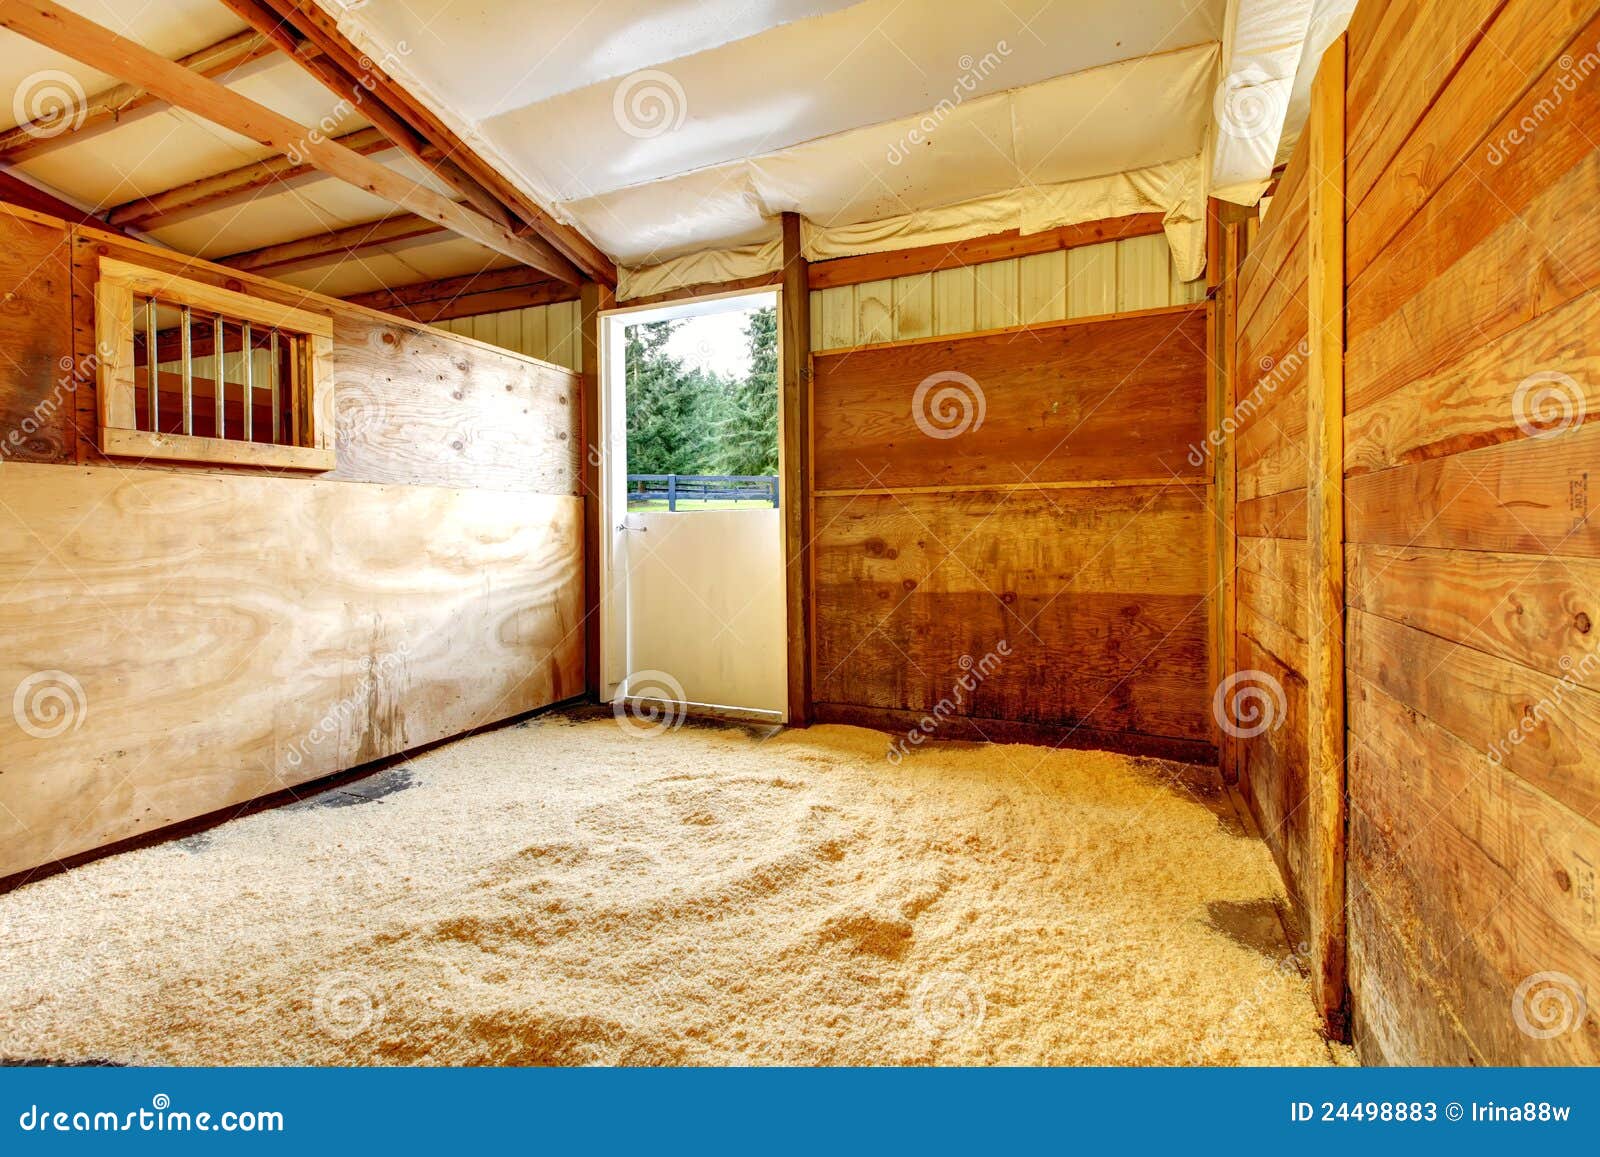 horse farm empty stable interior.